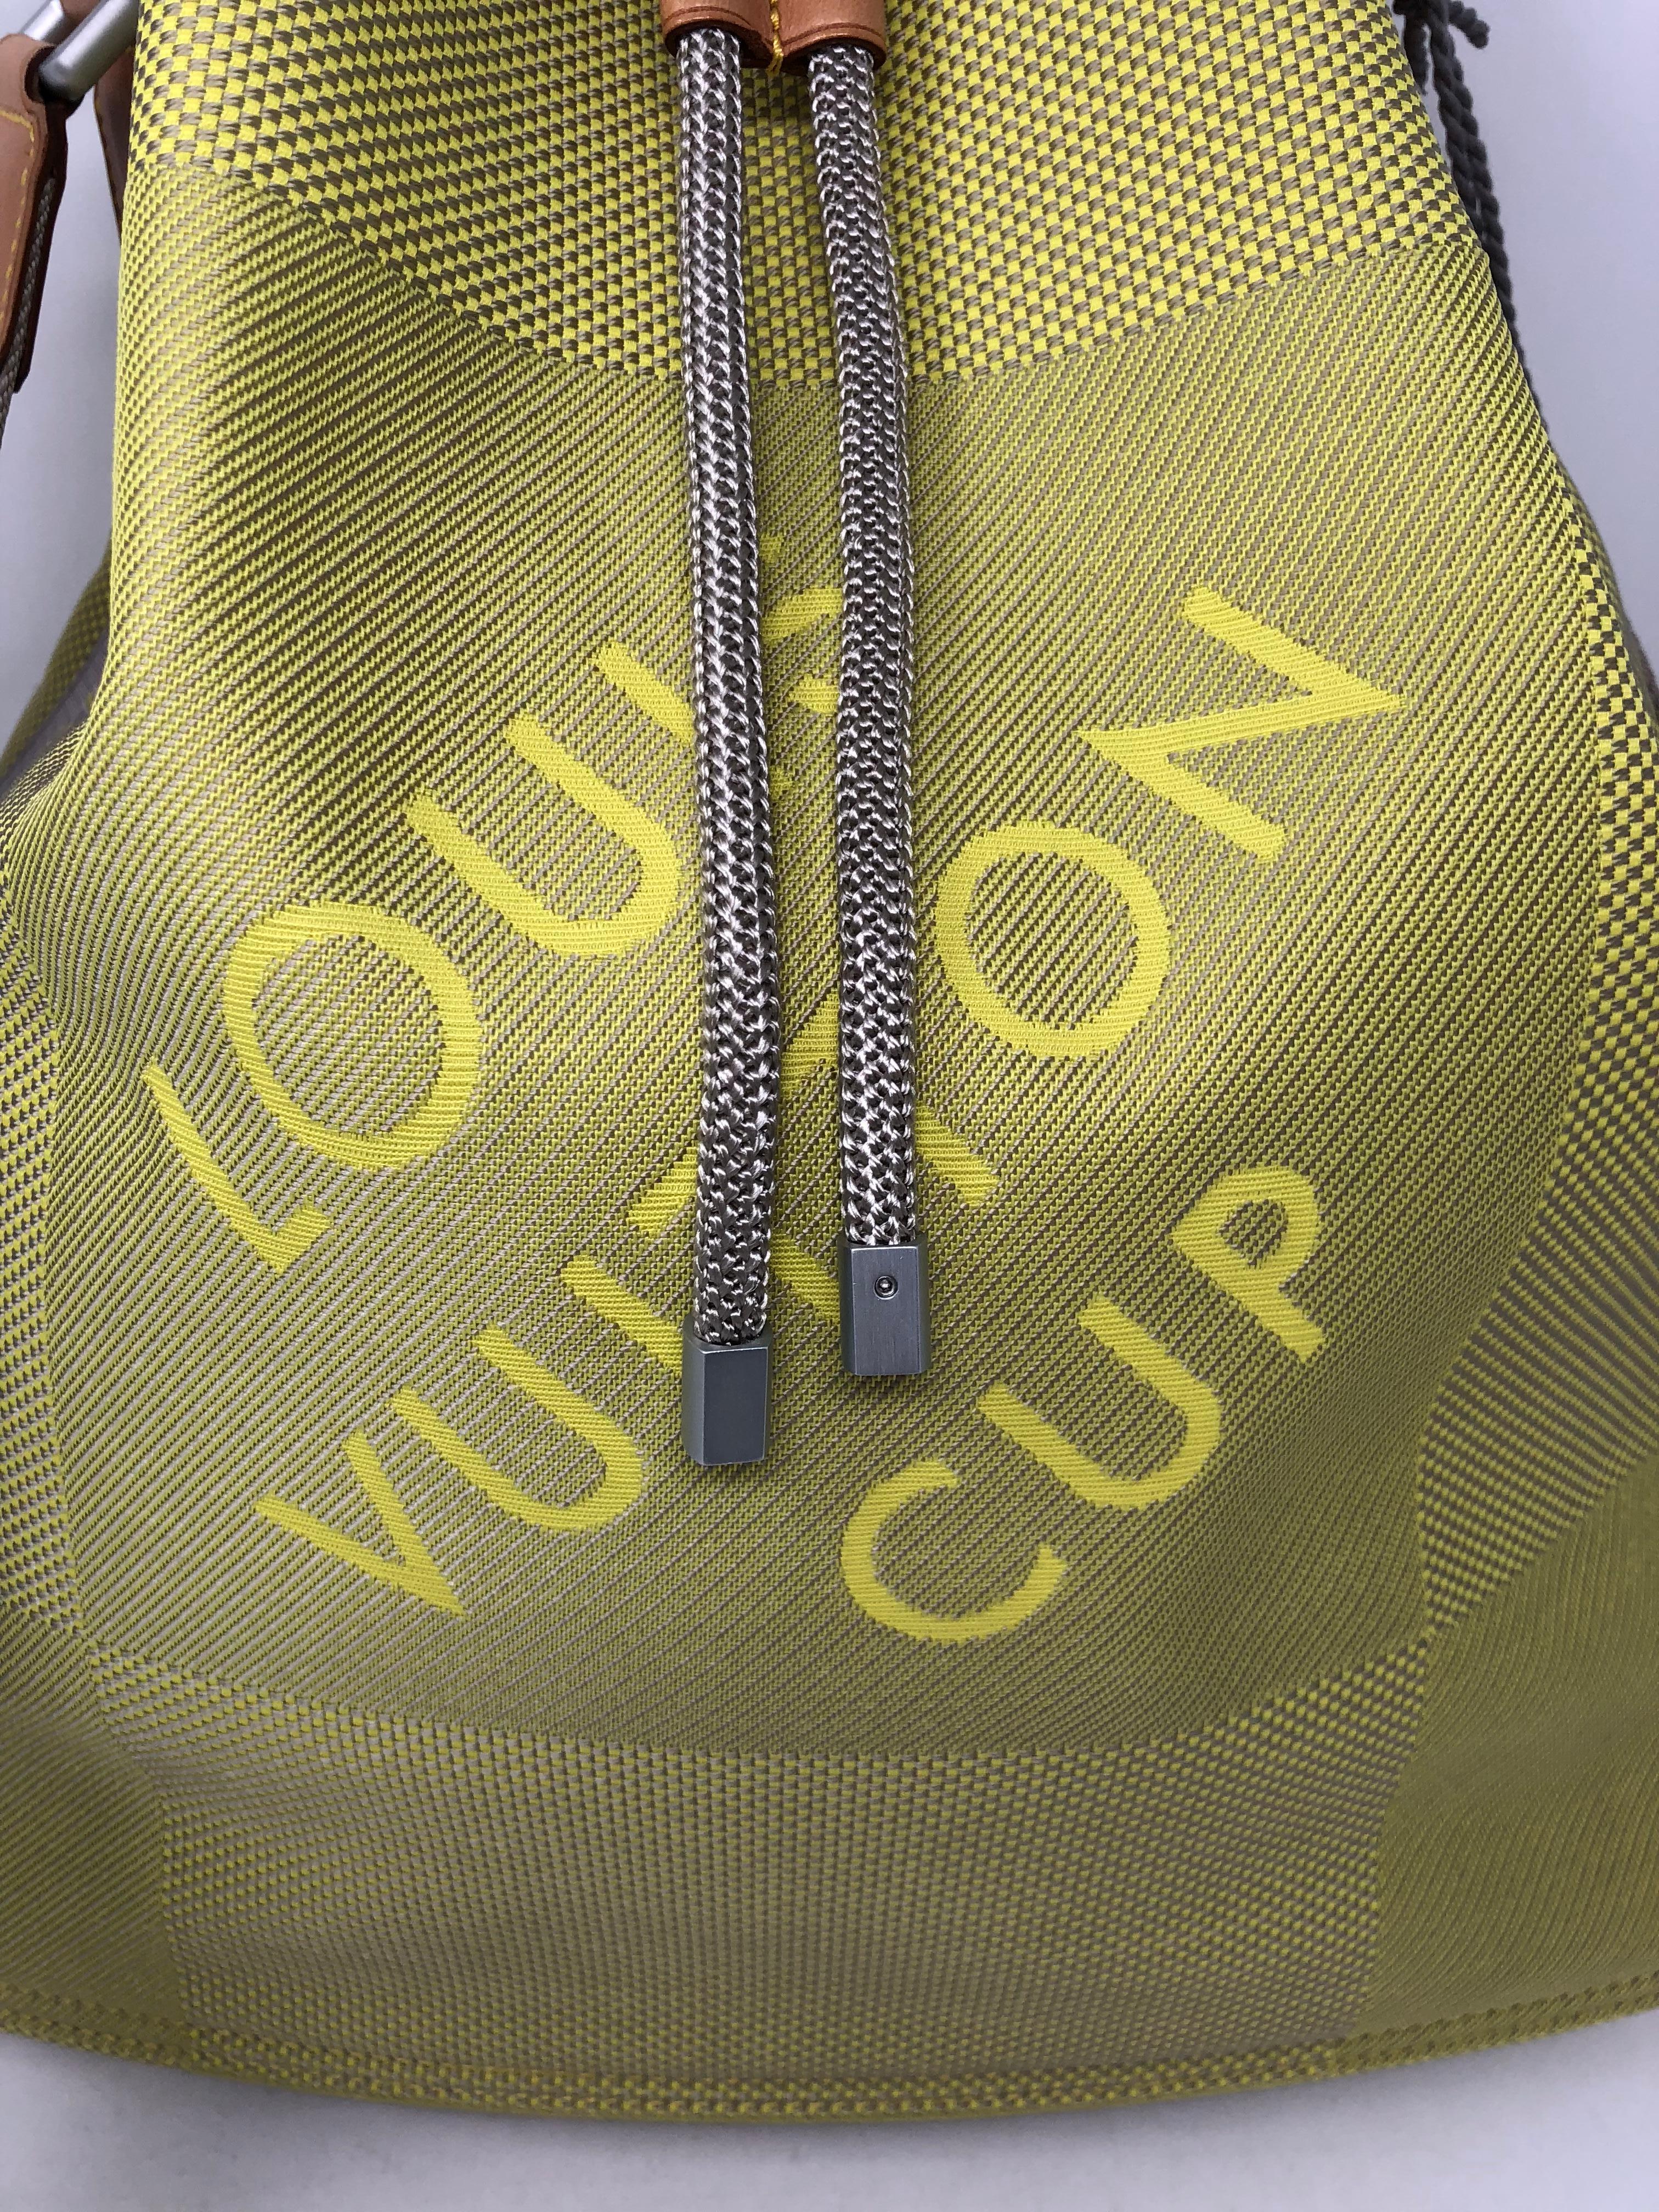 Women's or Men's Louis Vuitton Cup Lime Green Damier Geant Noe Bag